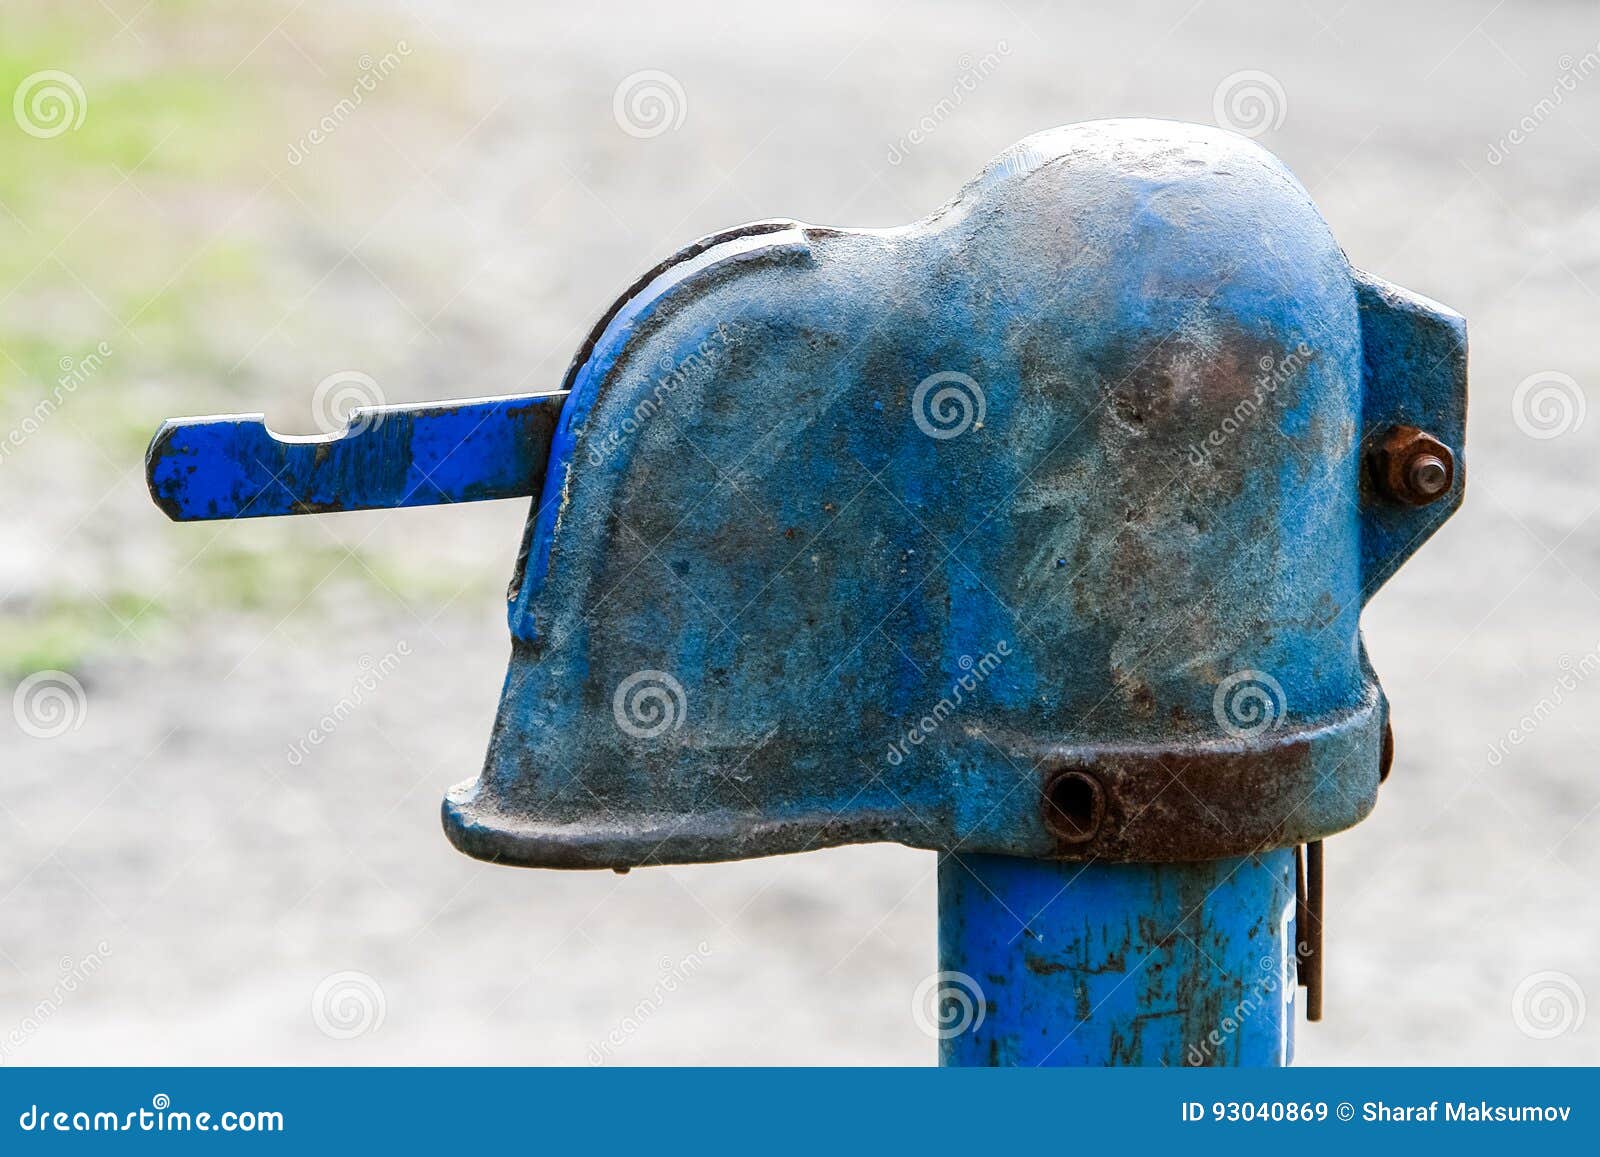 Old Metal Water Pump on Russian Slum Village. Stock Image - Image of ...